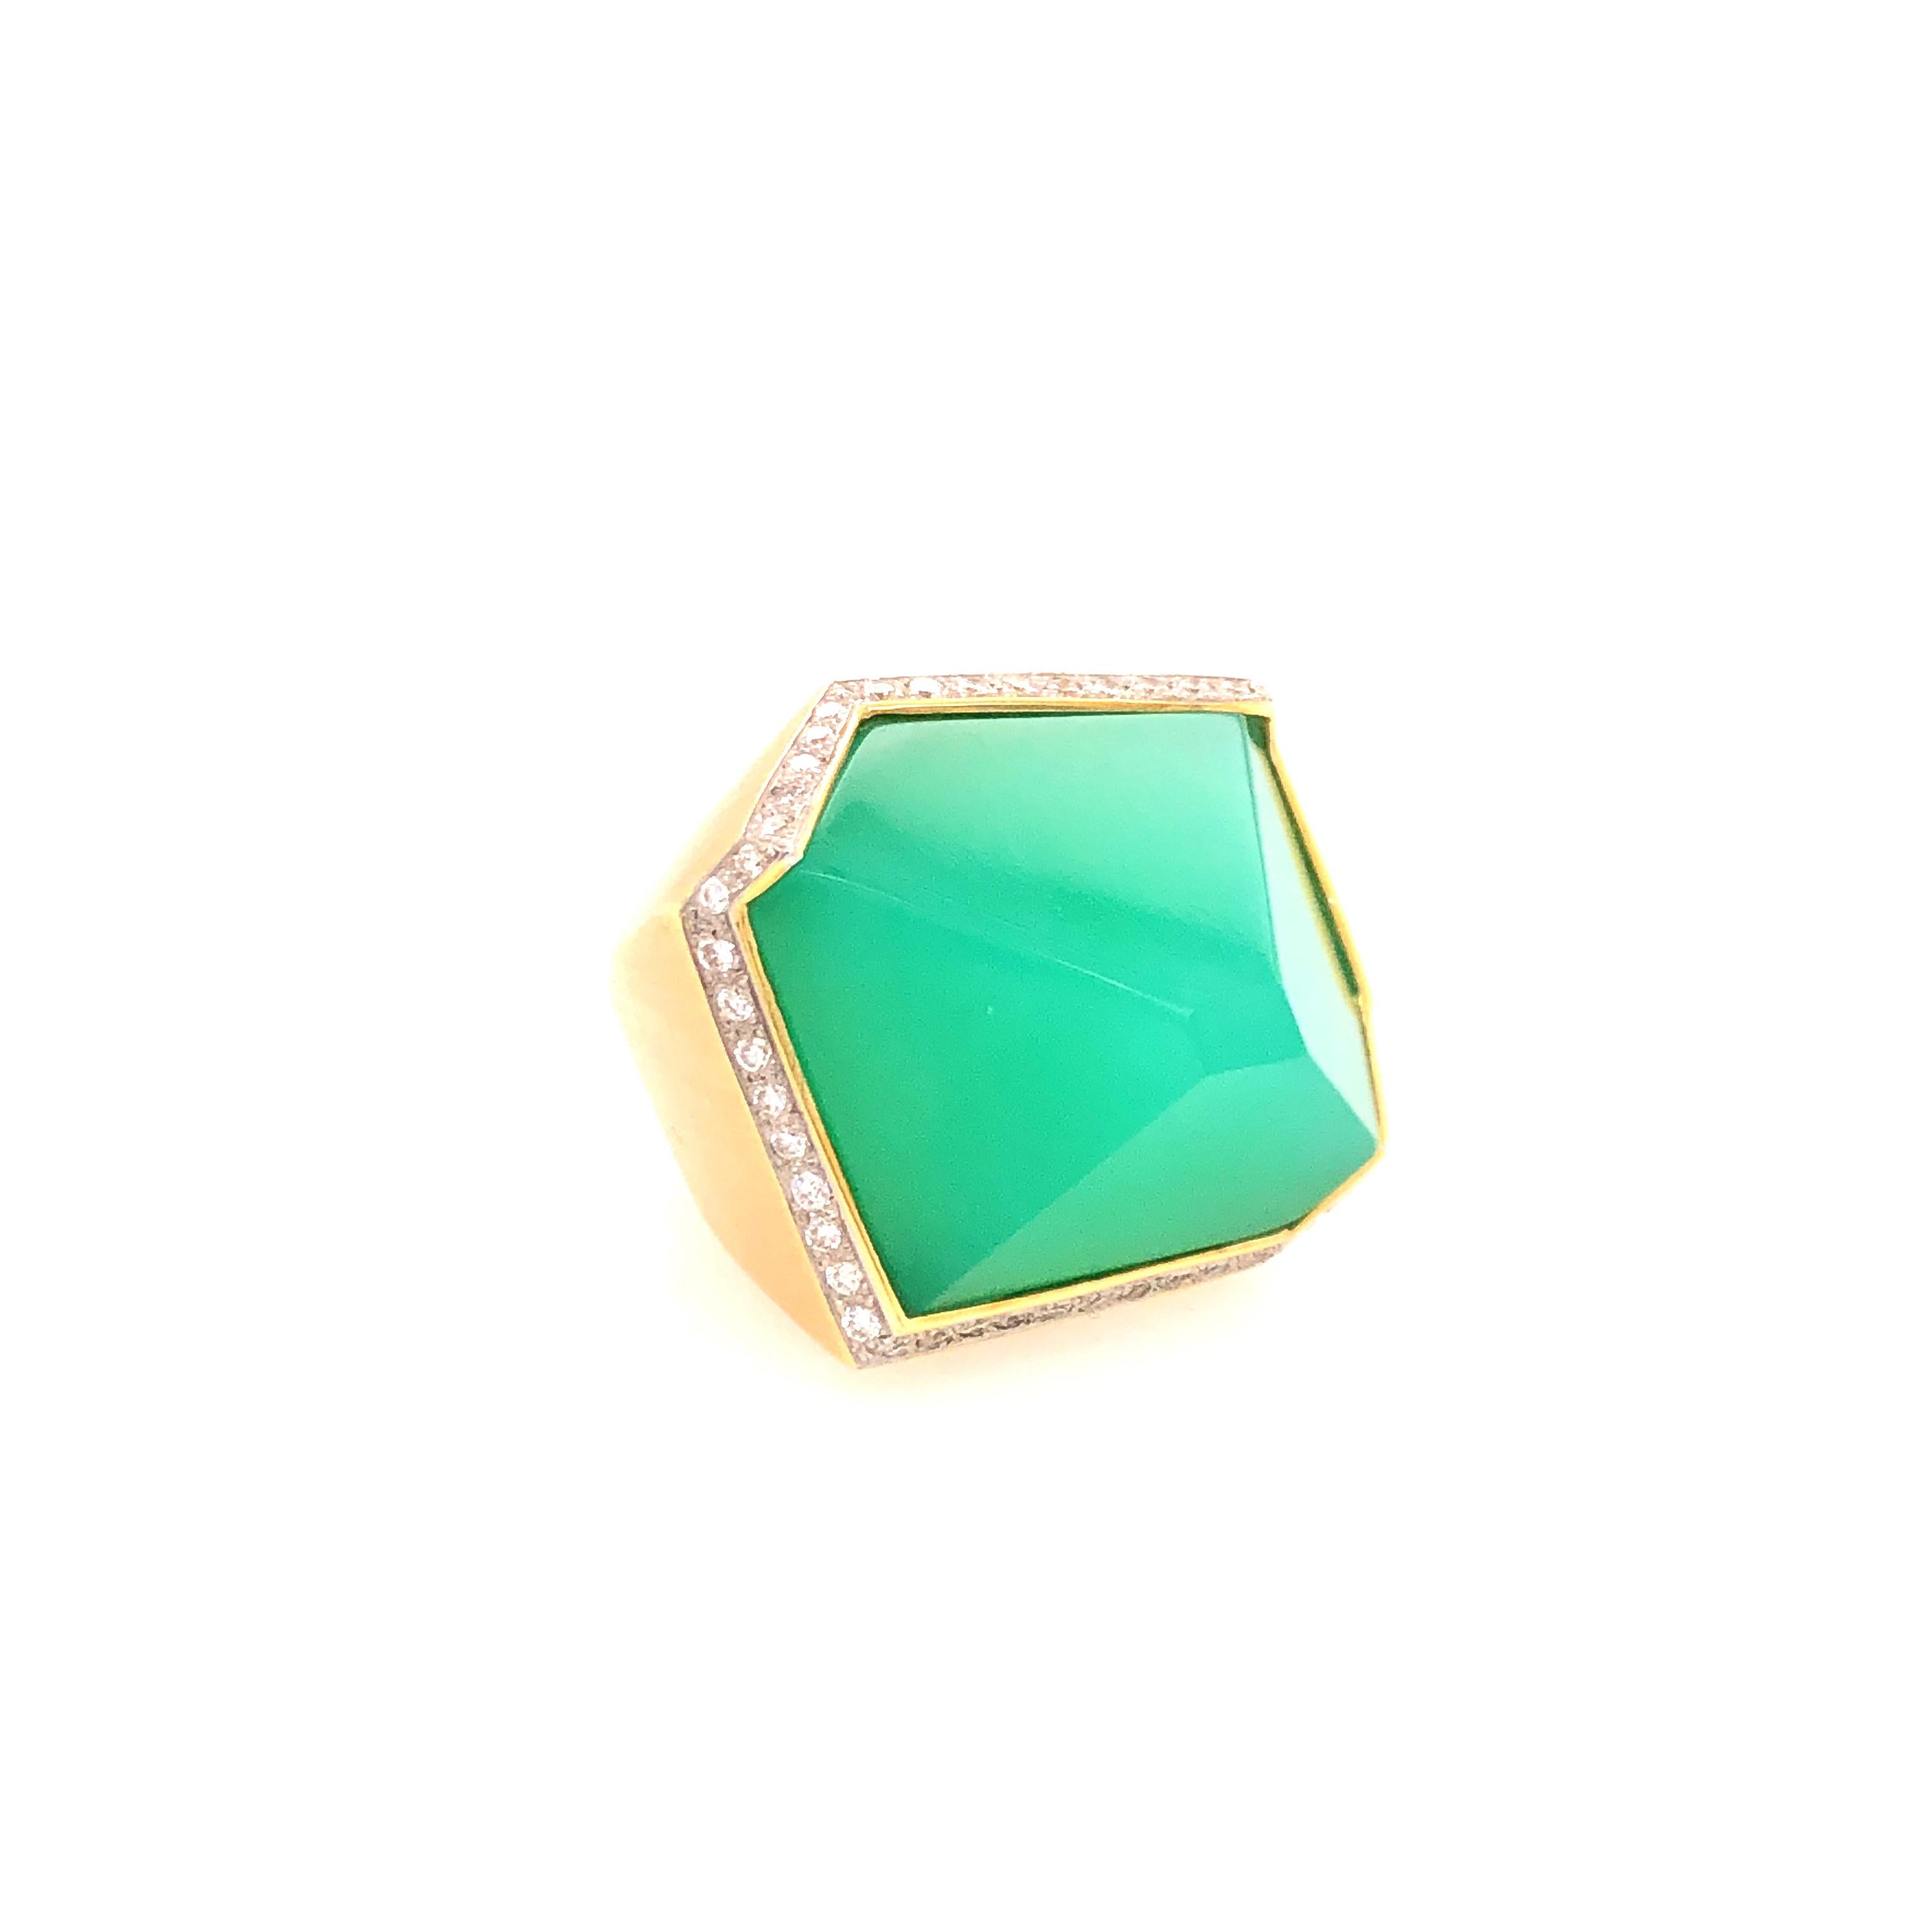 Modern Valerie Naifeh 17.36 Carat Green Chrysoprase Diamond Ring